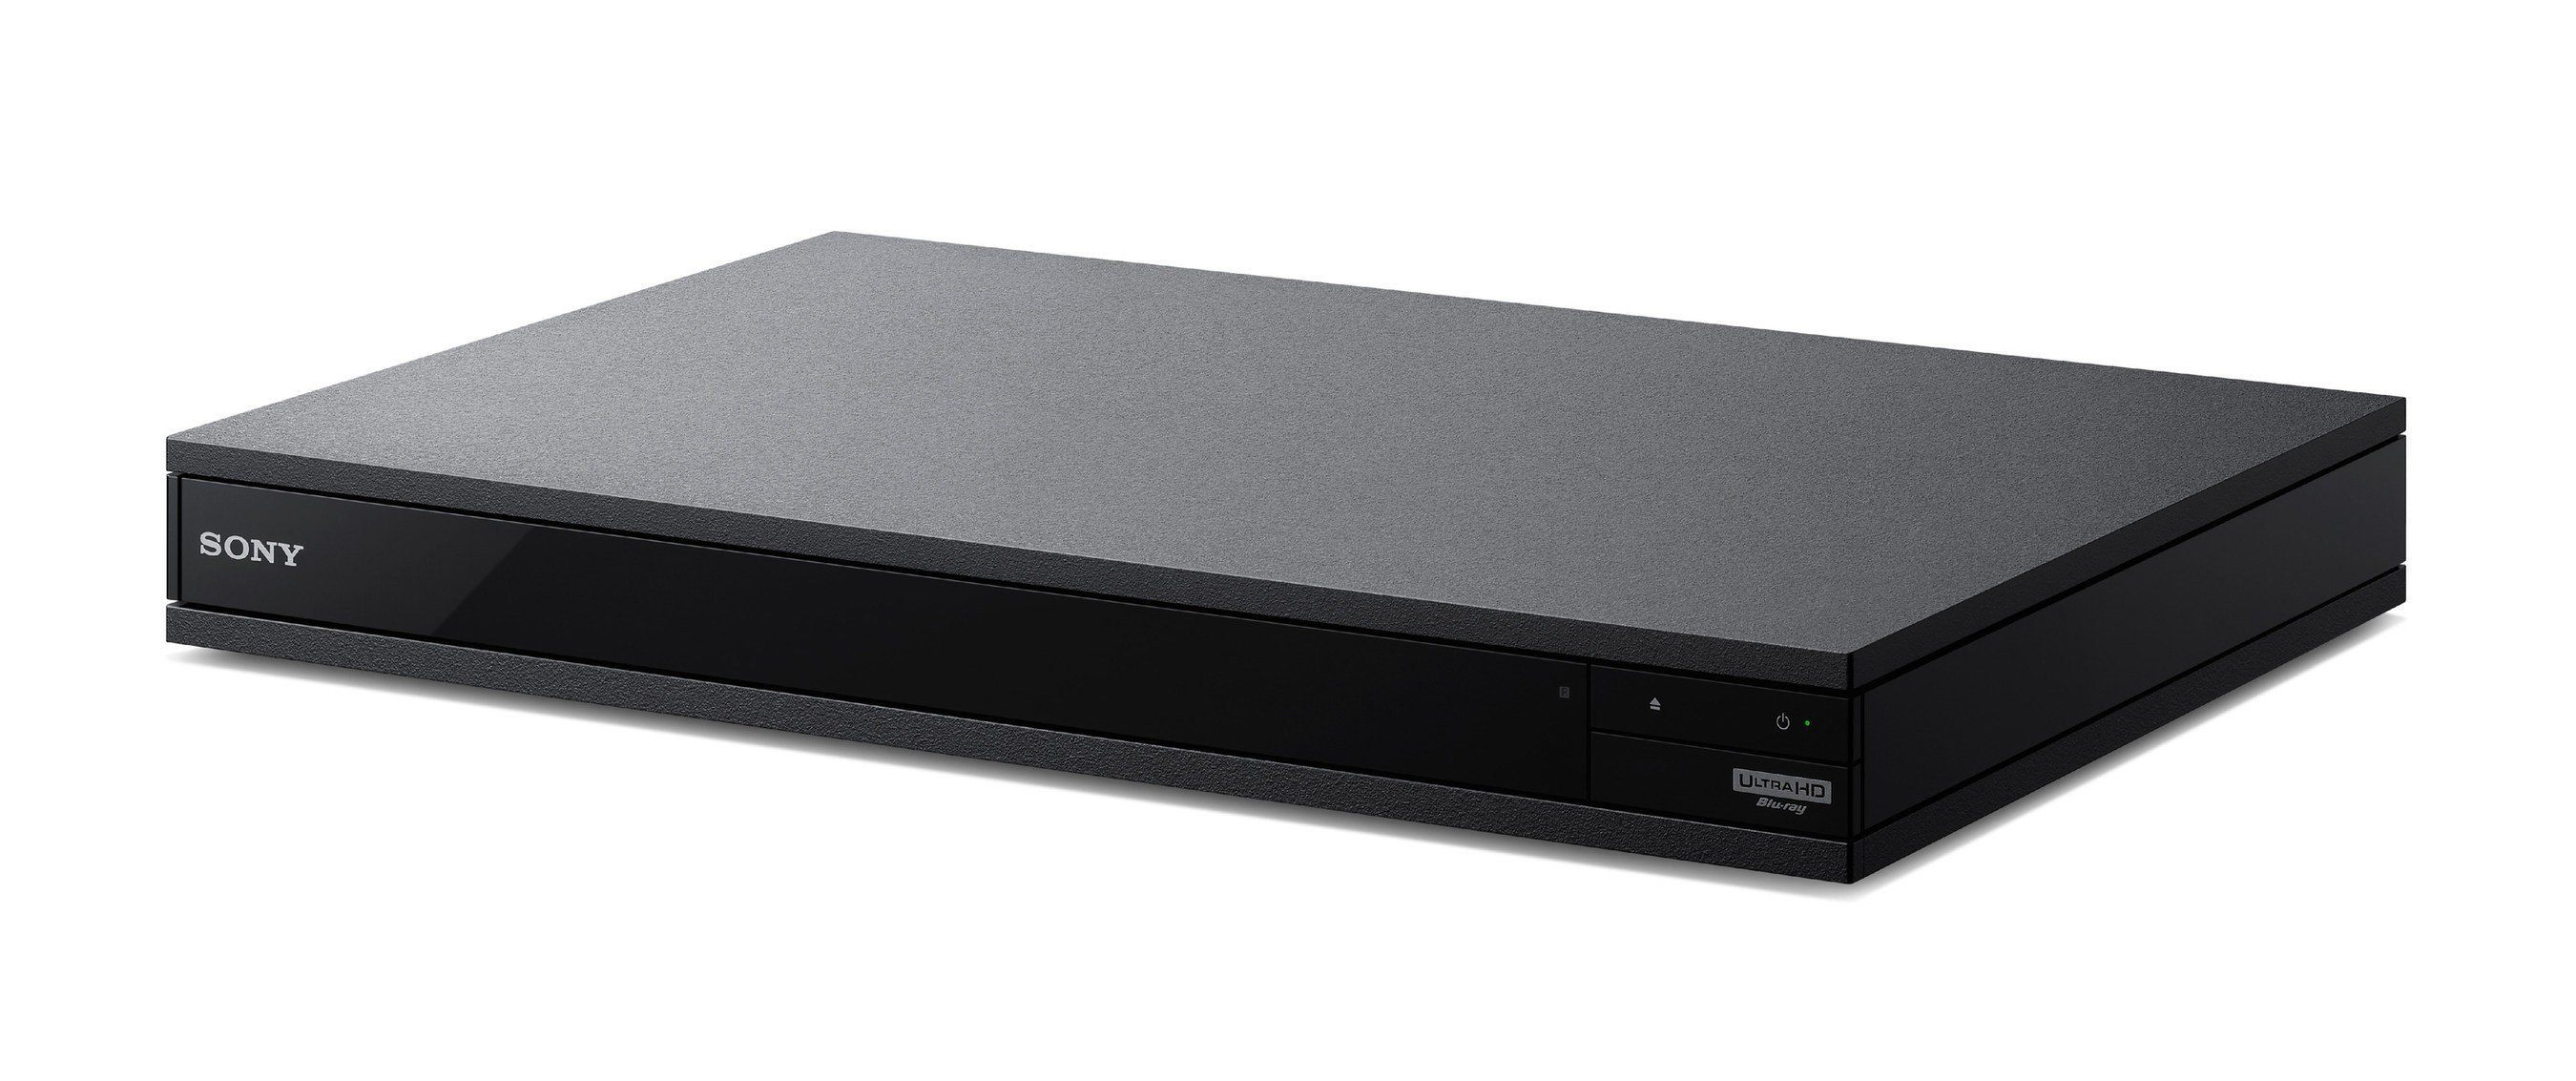 Sony UBP-X800M2, Lecteur Blu-ray 3D